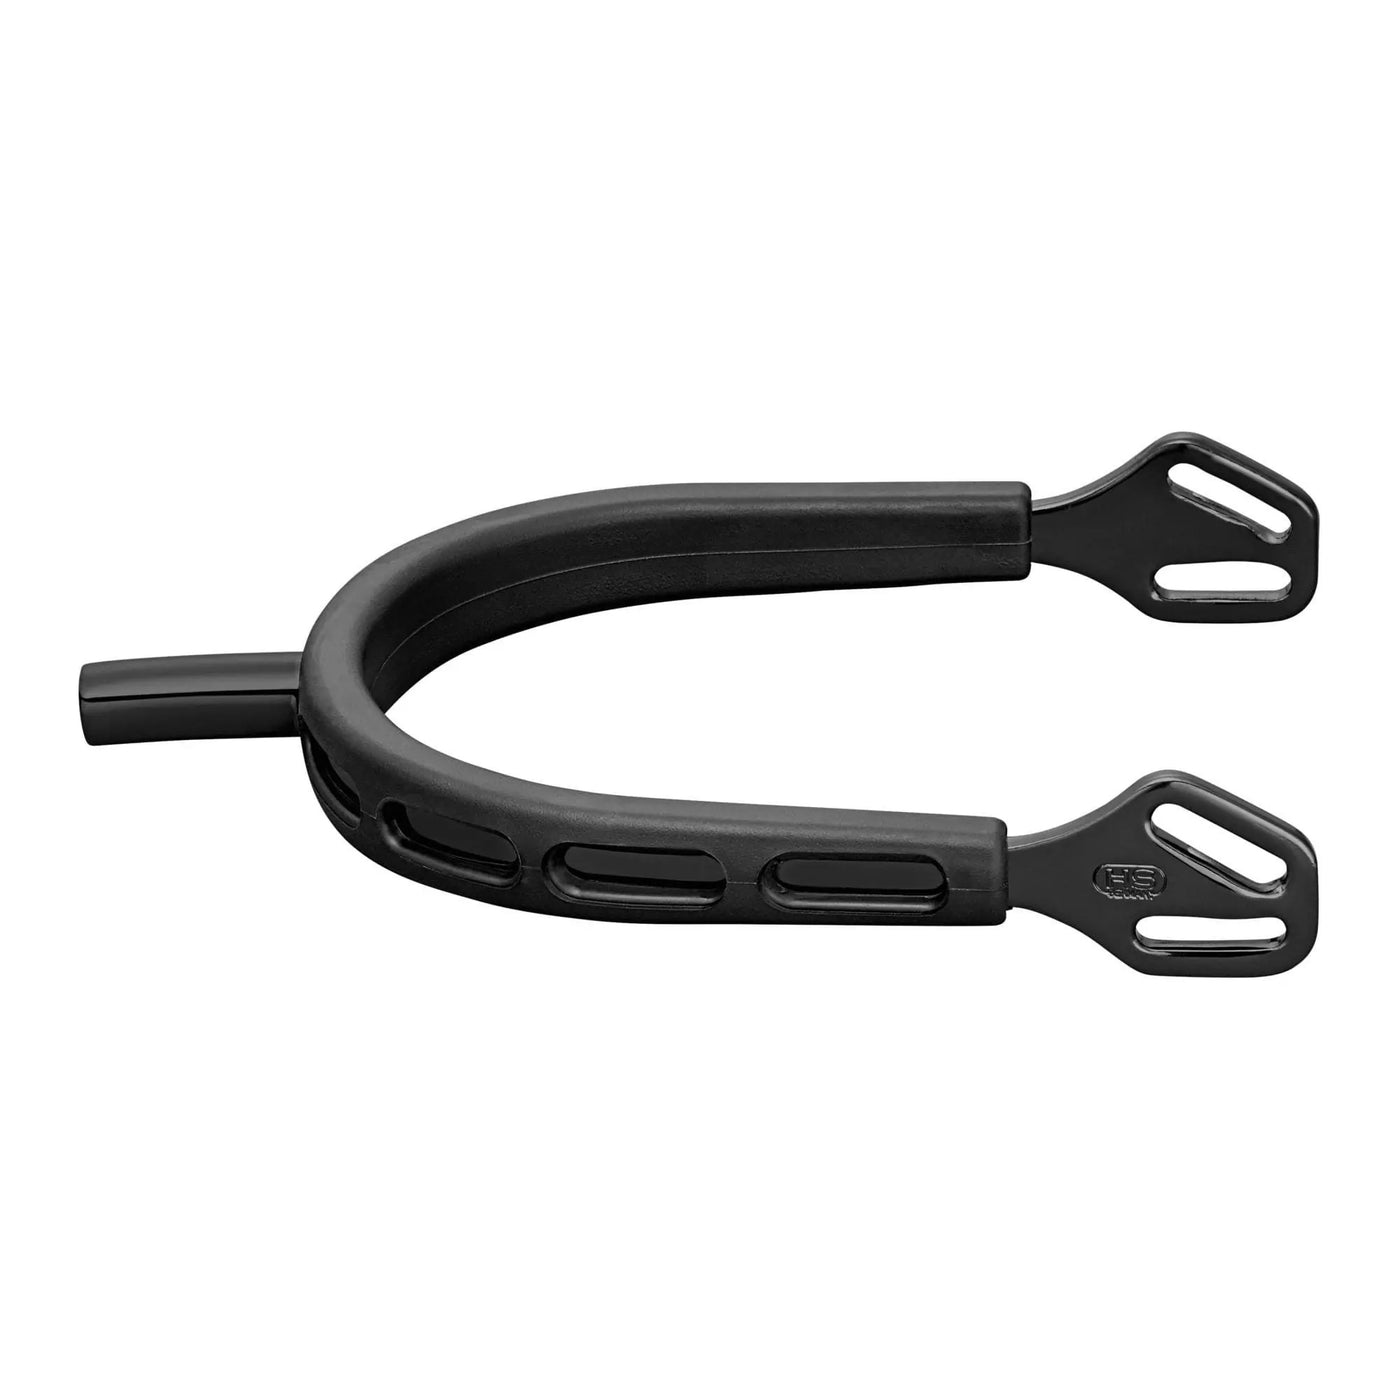 Sprenger Ultra Fit Extra Grip Sporer, Black Series